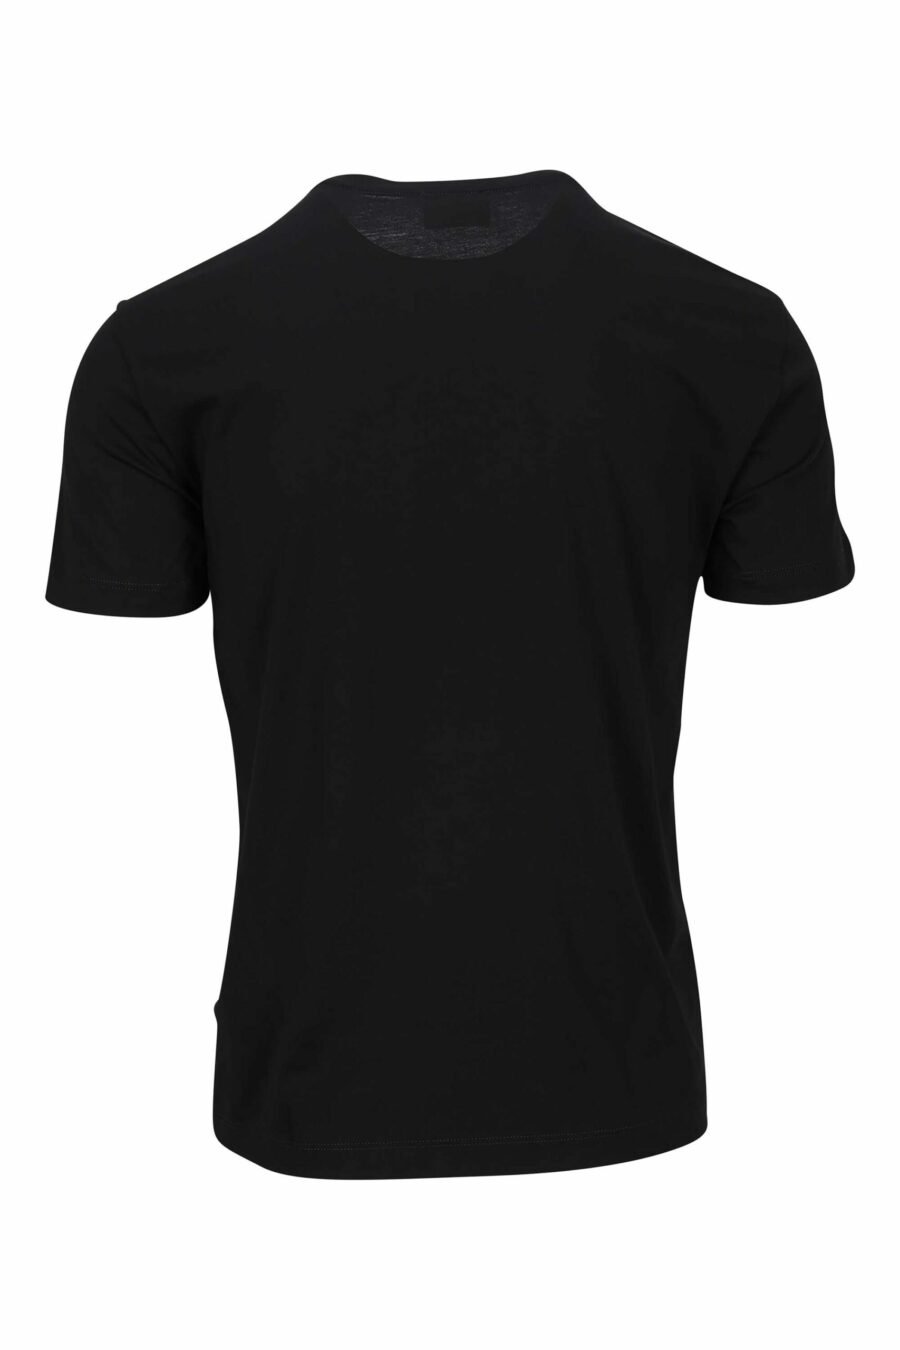 T-shirt schwarz mit goldenem Maxilogo "lux identity" - 8056787951167 1 skaliert